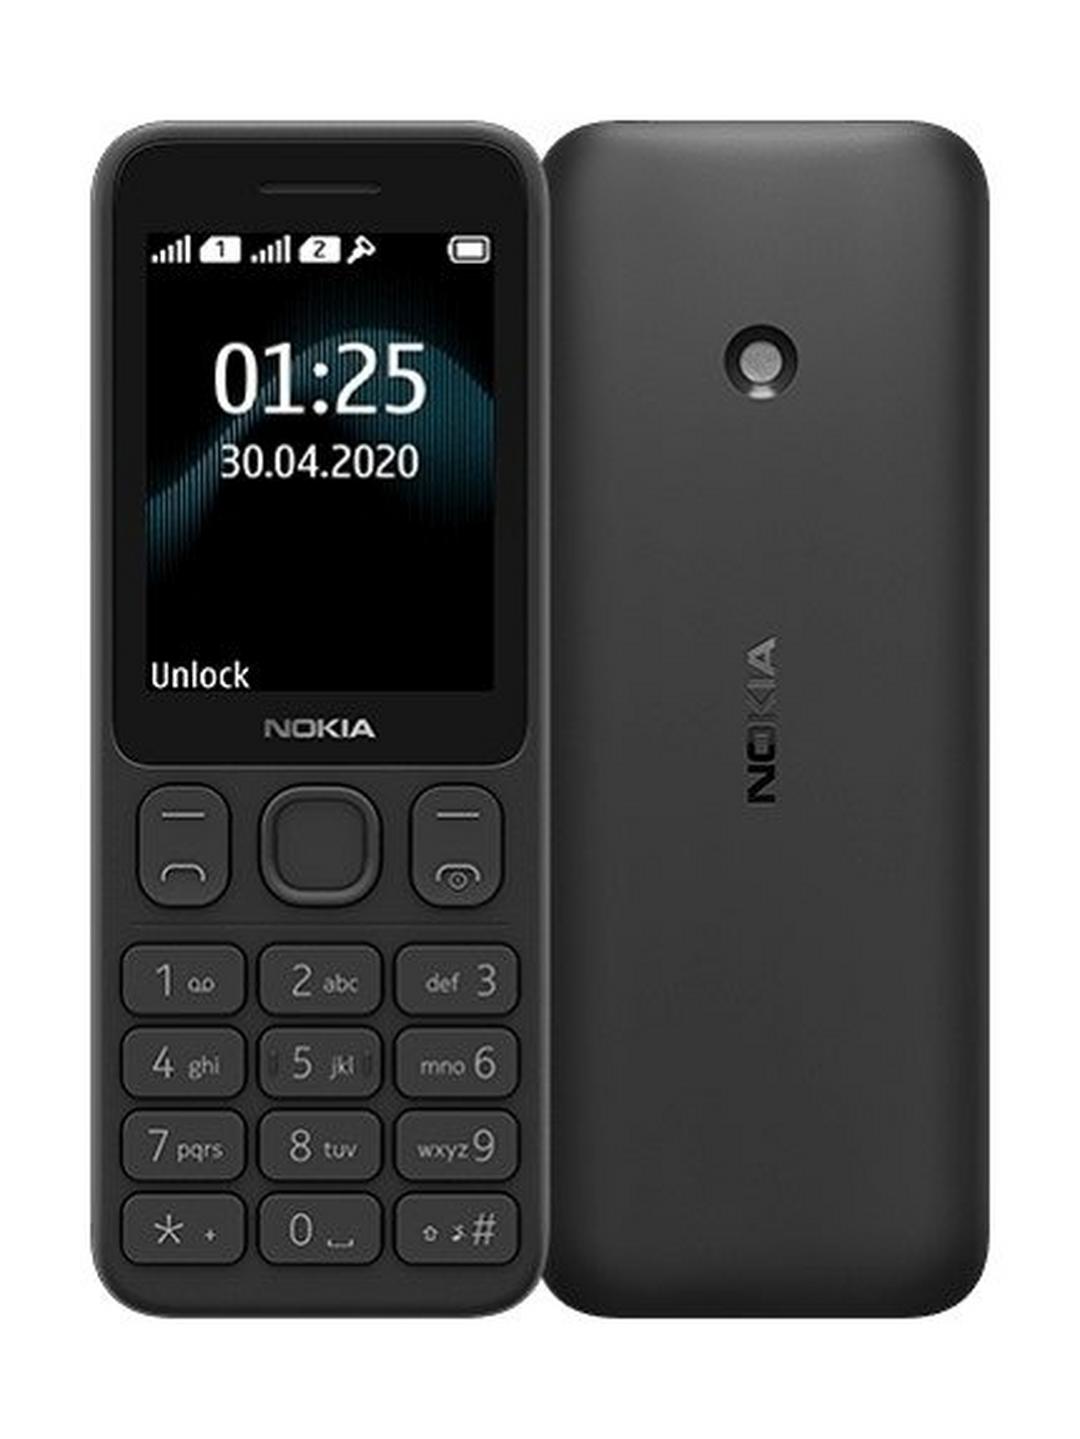 Nokia 125 TA-1253 4MB 2G Phone - Black